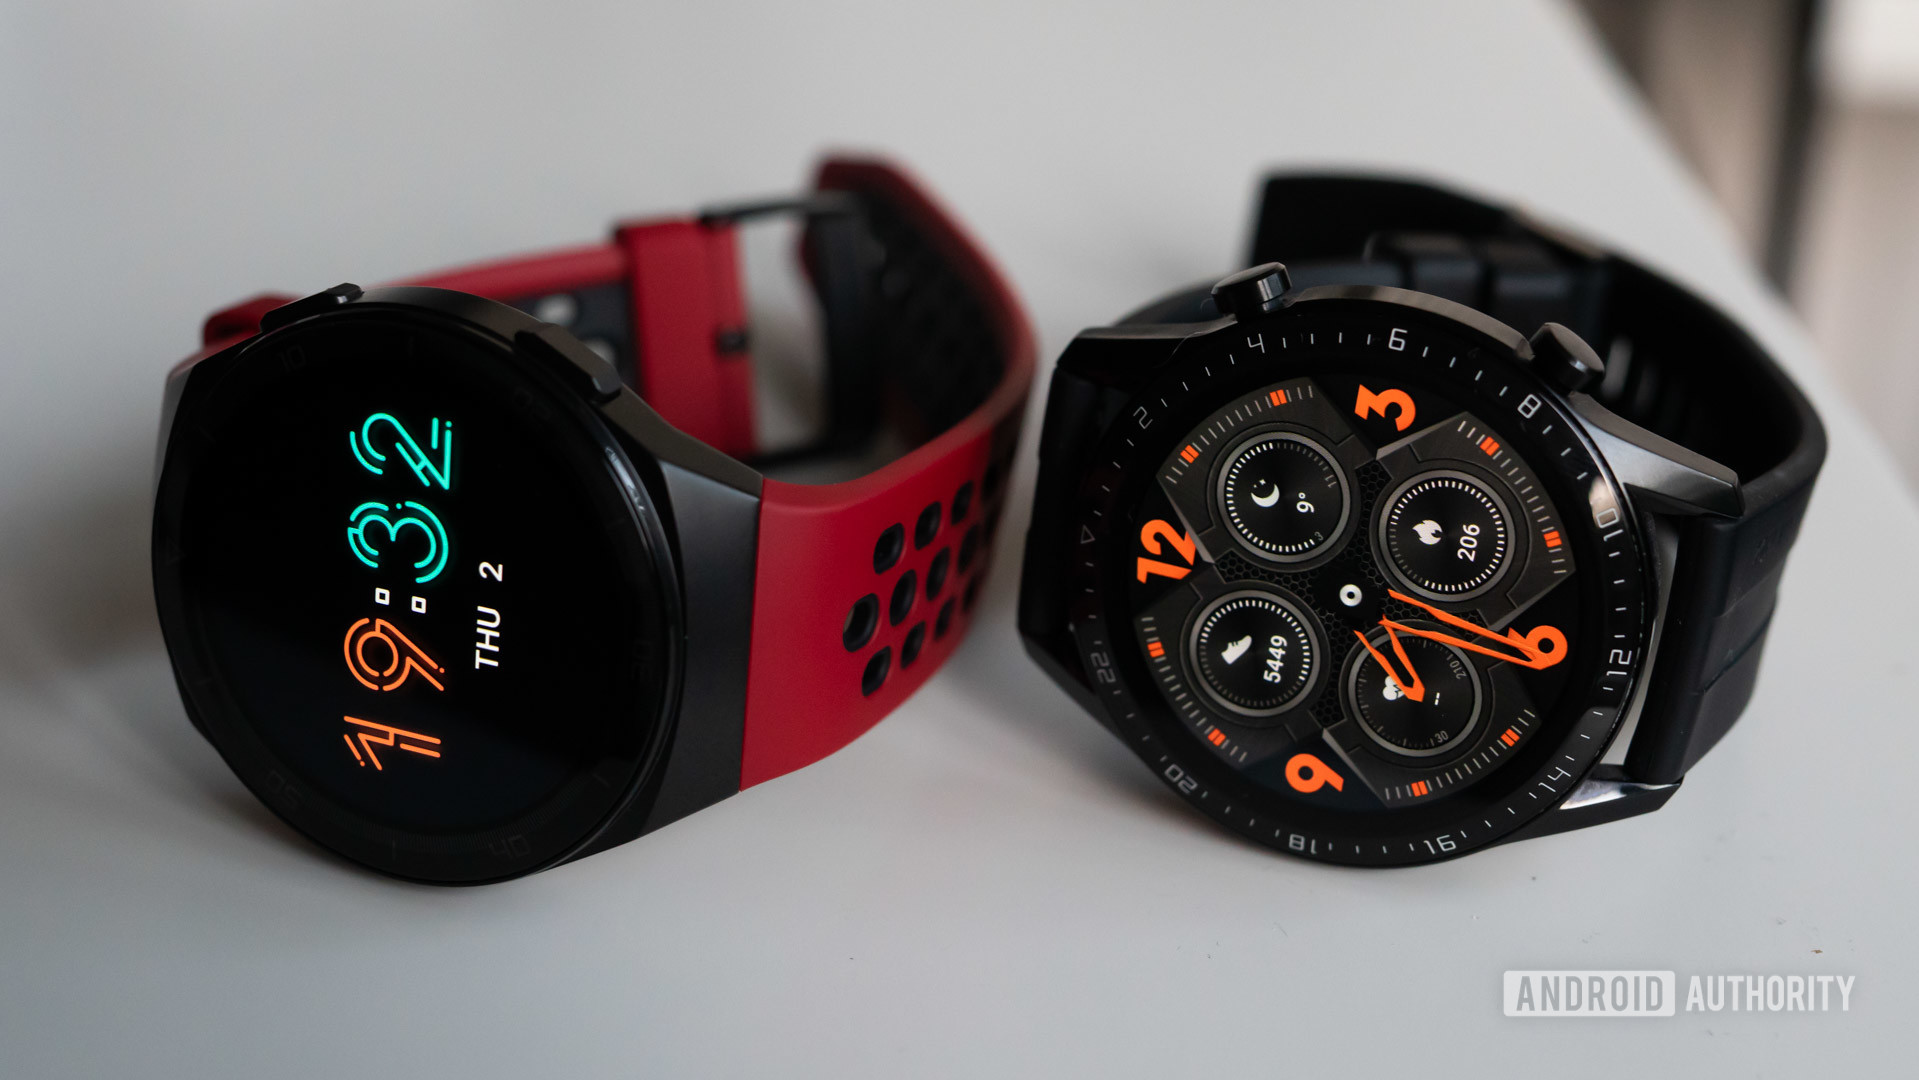 Huawei Watch GT 2e hands-on: The endurance smartwatch